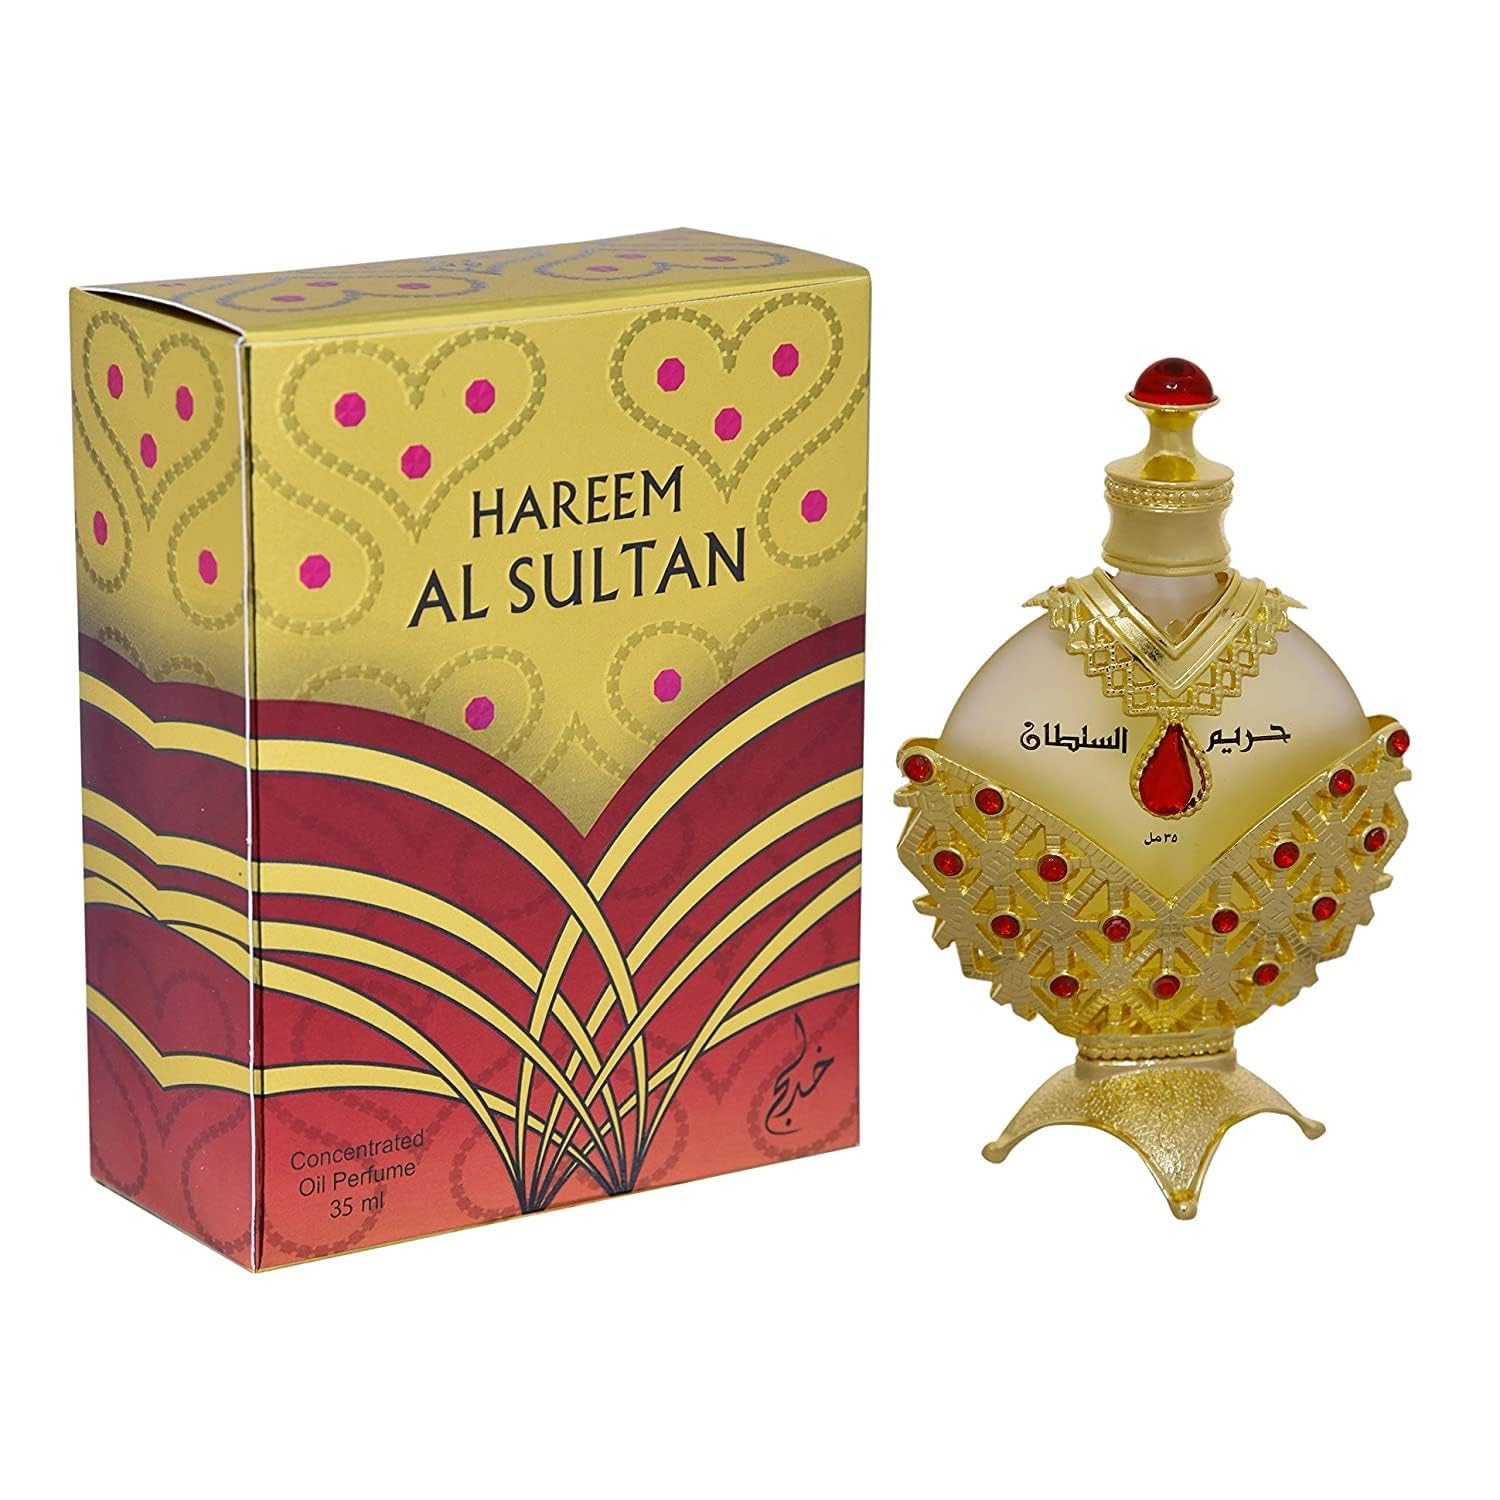 Hareem Sultan Gold CPO (35ml) perfume oil by Khadlaj | Khan El Khalili